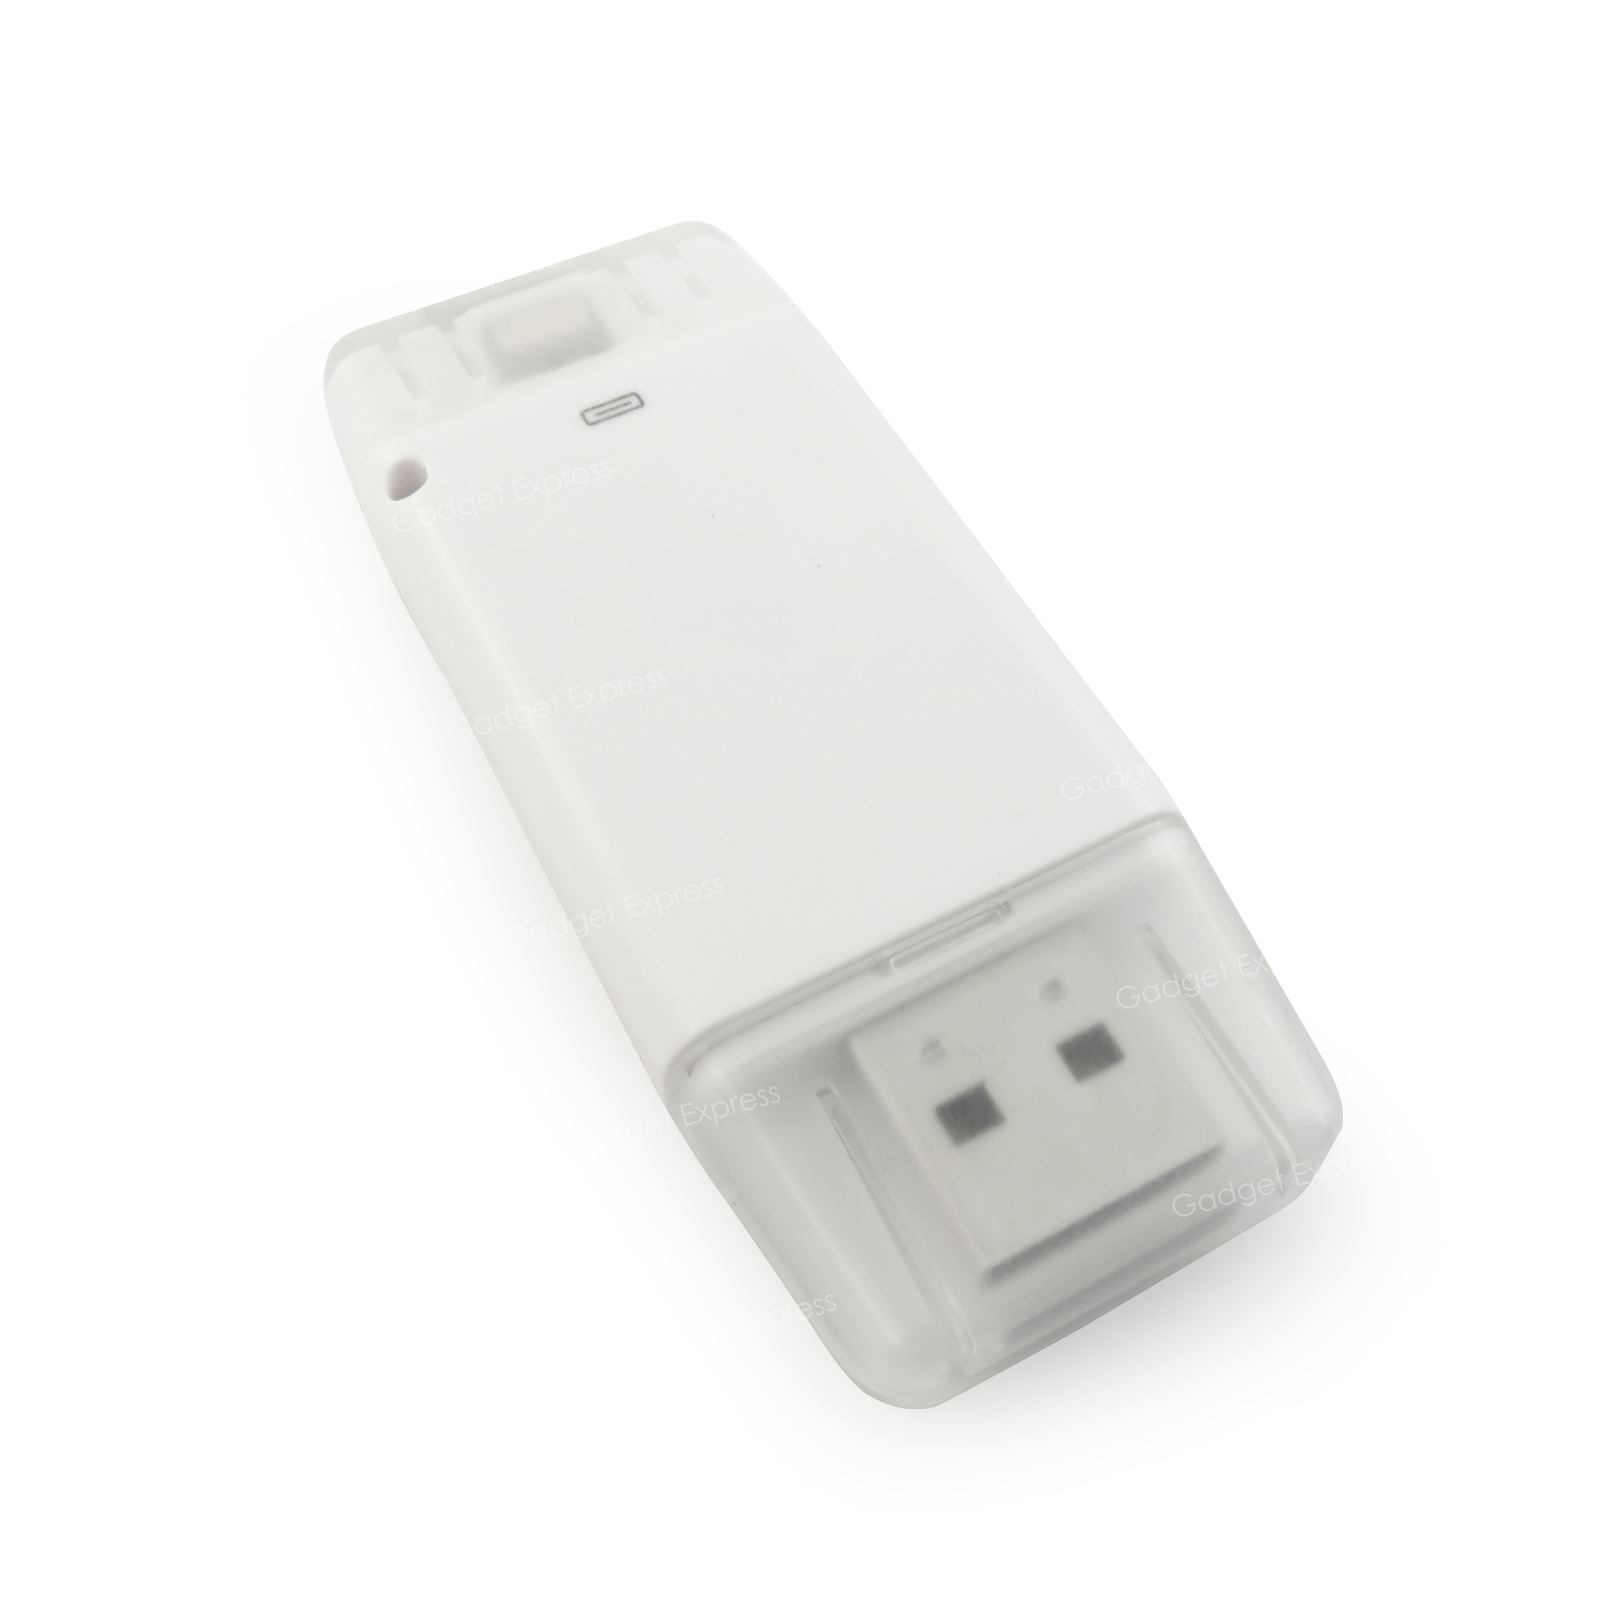 Hootoo iphone flash drive